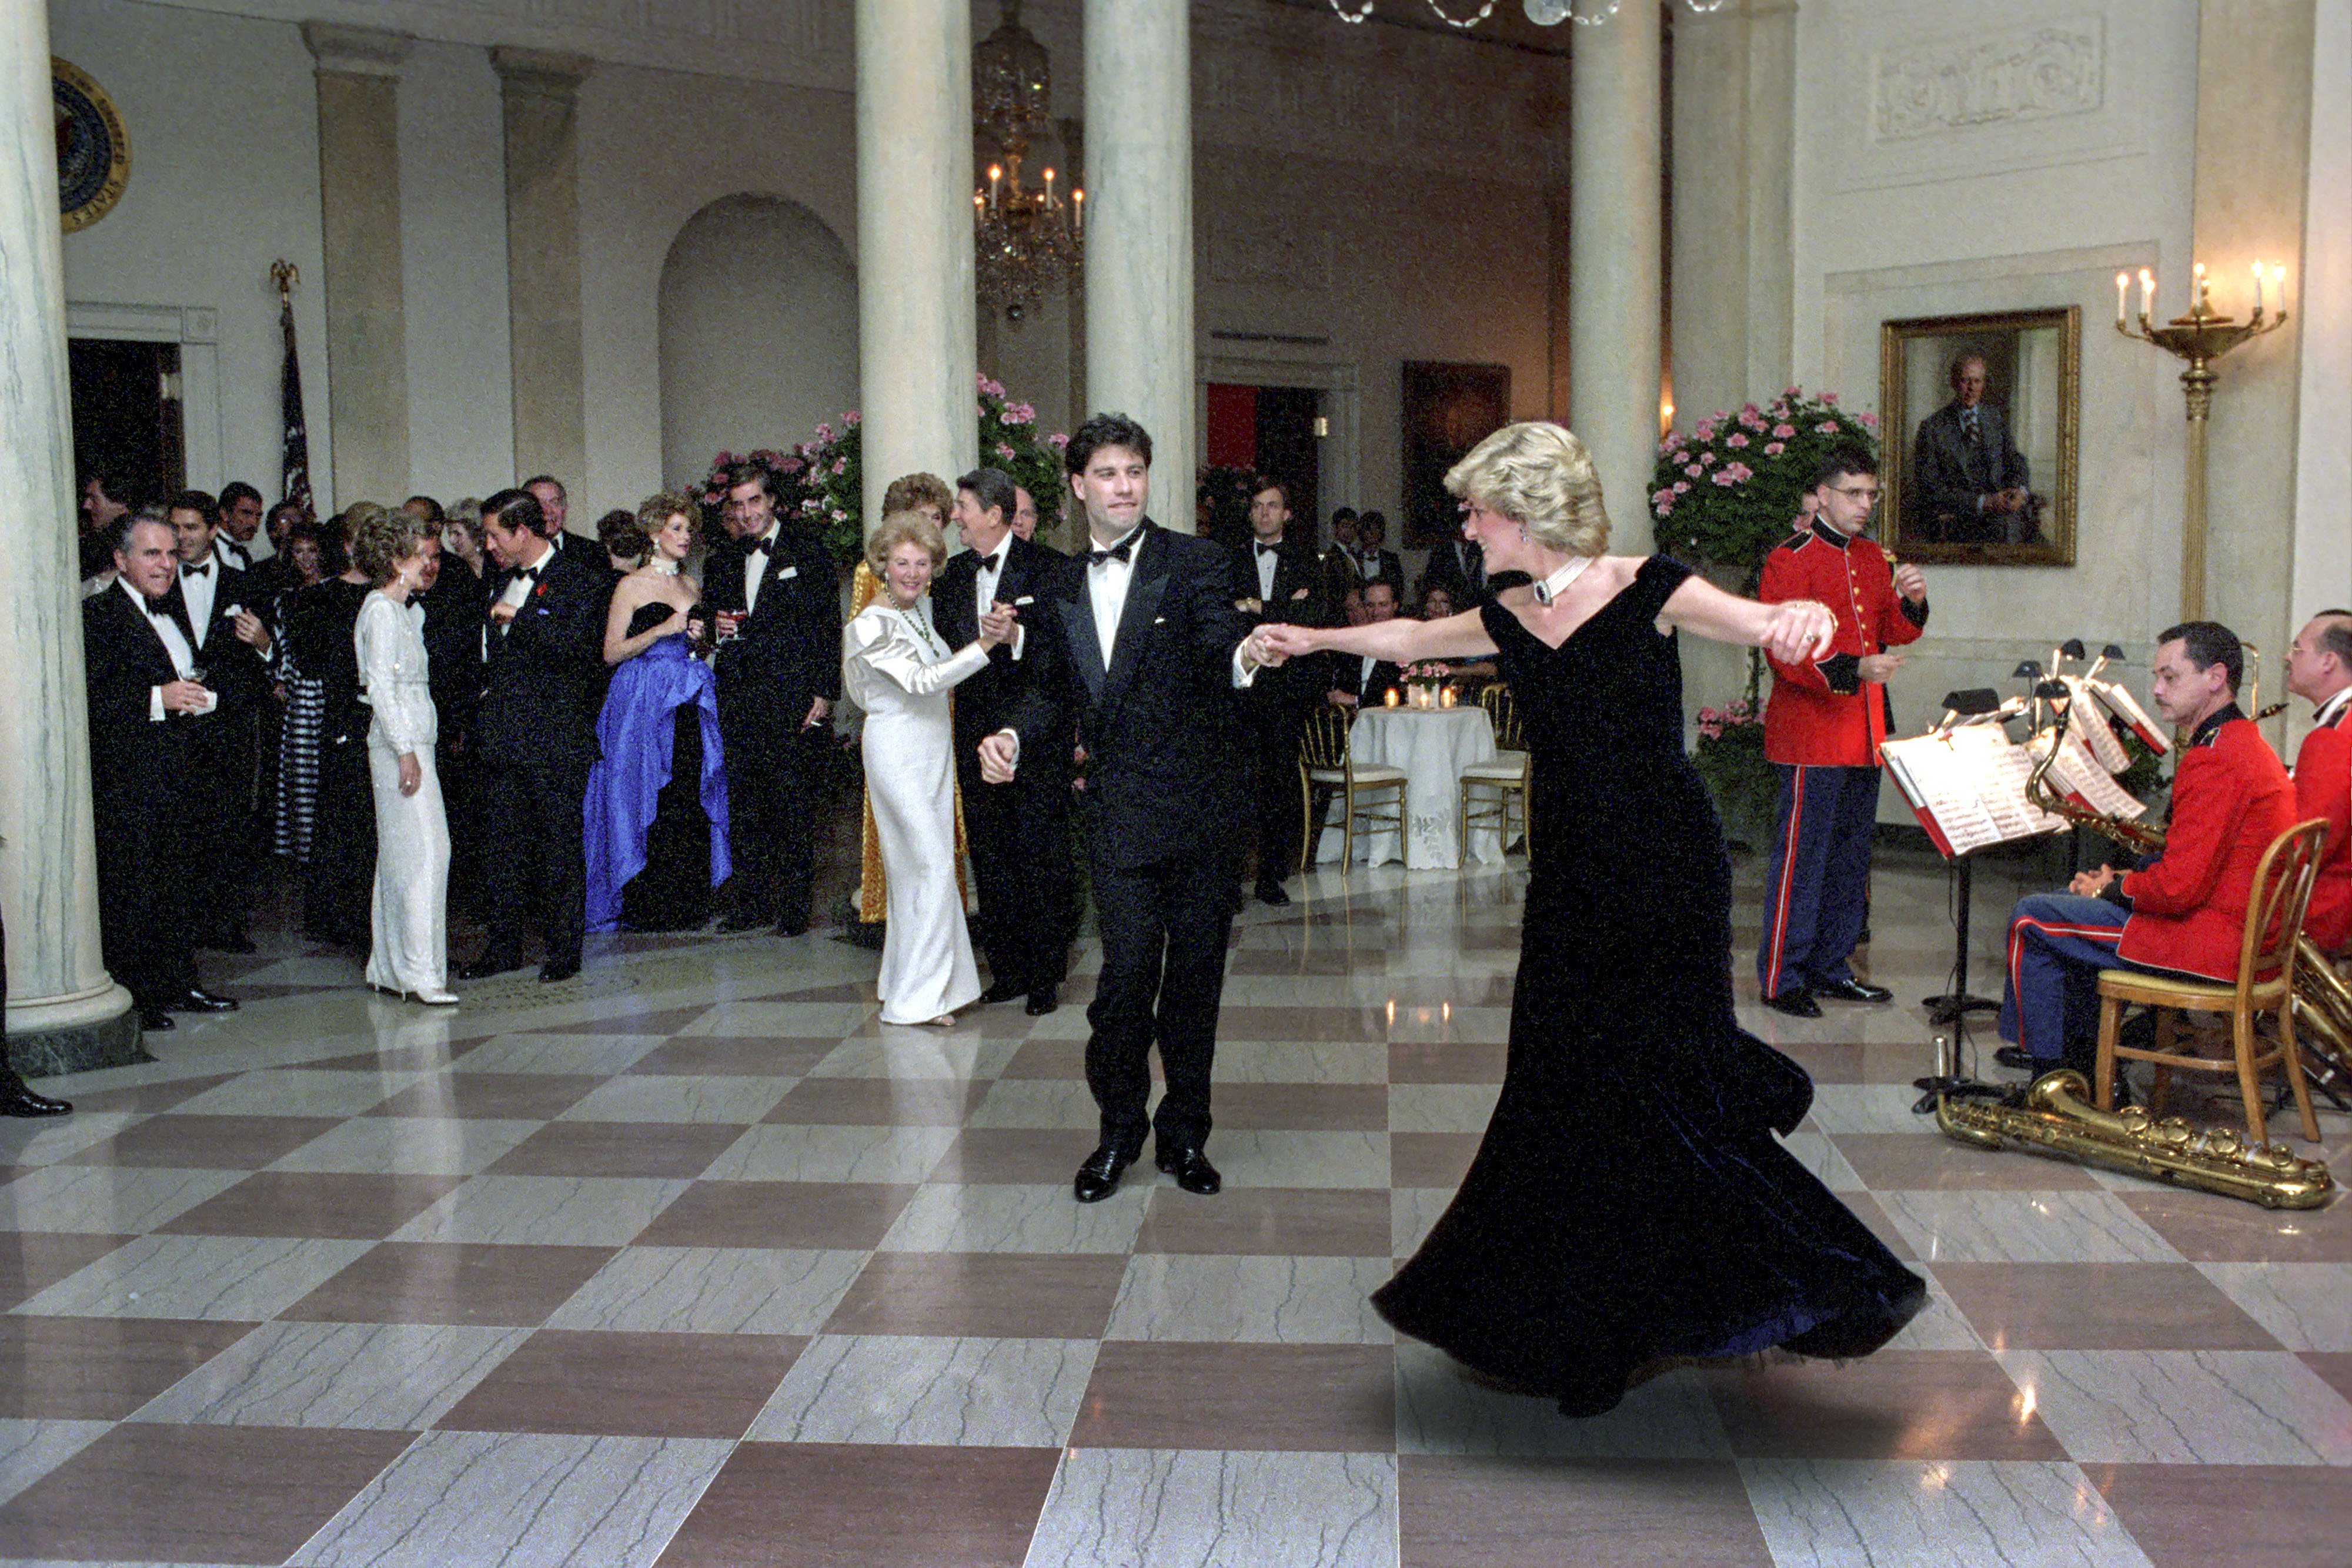 Princess Diana dancing with John Travolta in Washington 1985. | Source: Getty Images